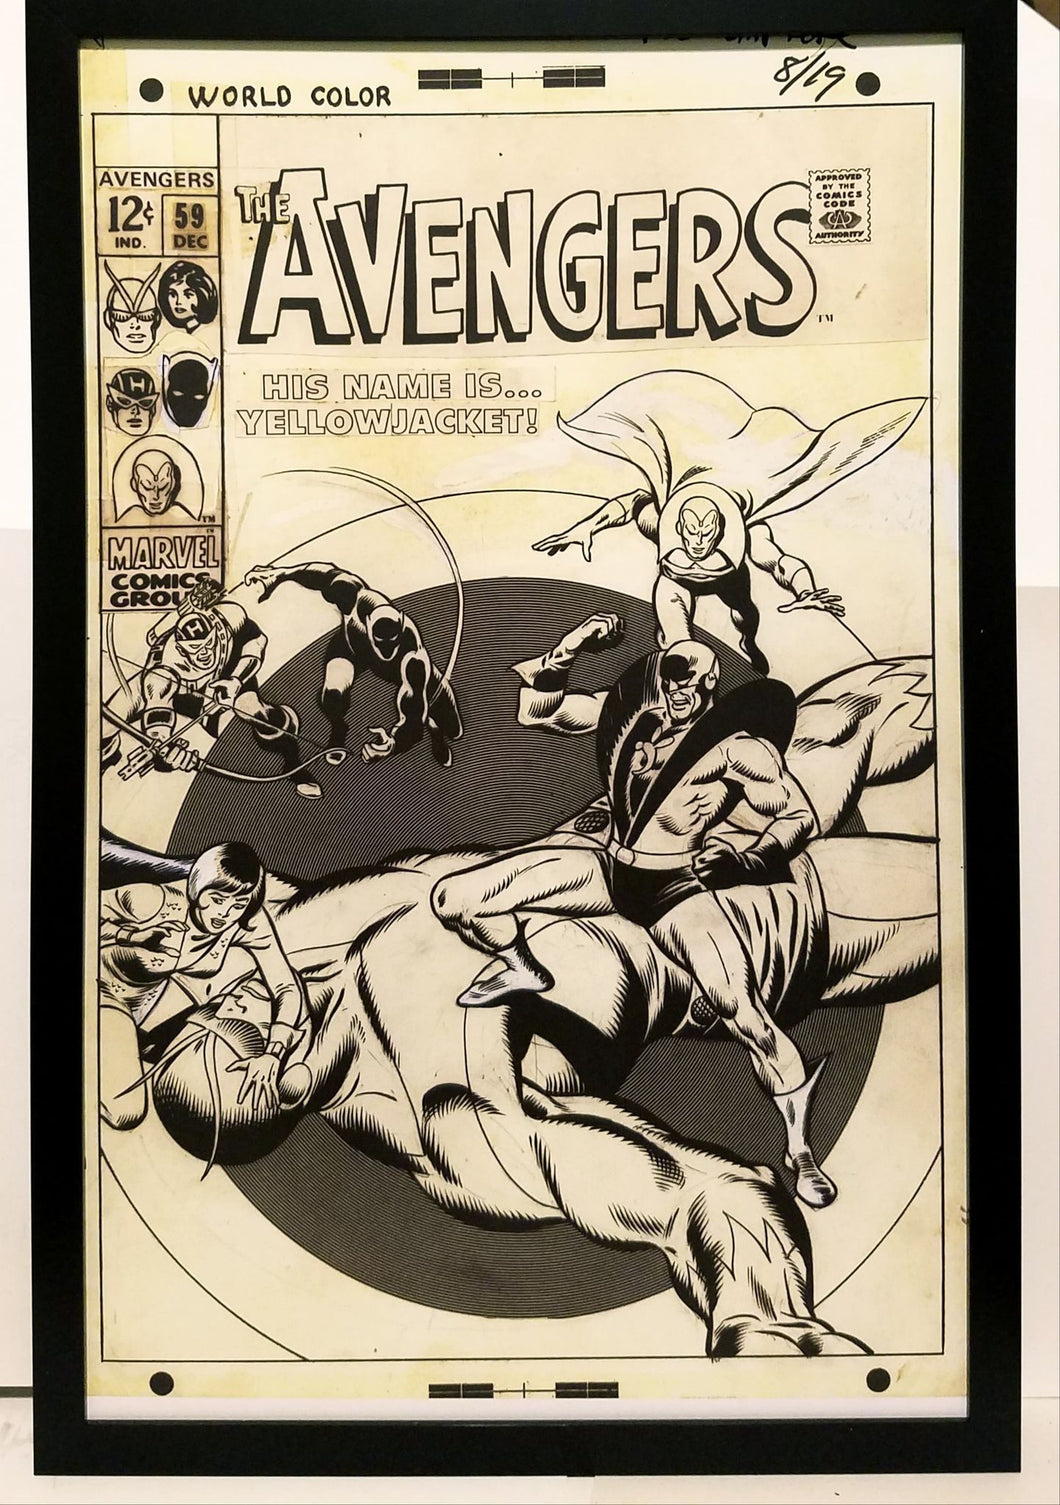 Avengers #59 by John Buscema 11x17 FRAMED Original Art Poster Marvel Comics